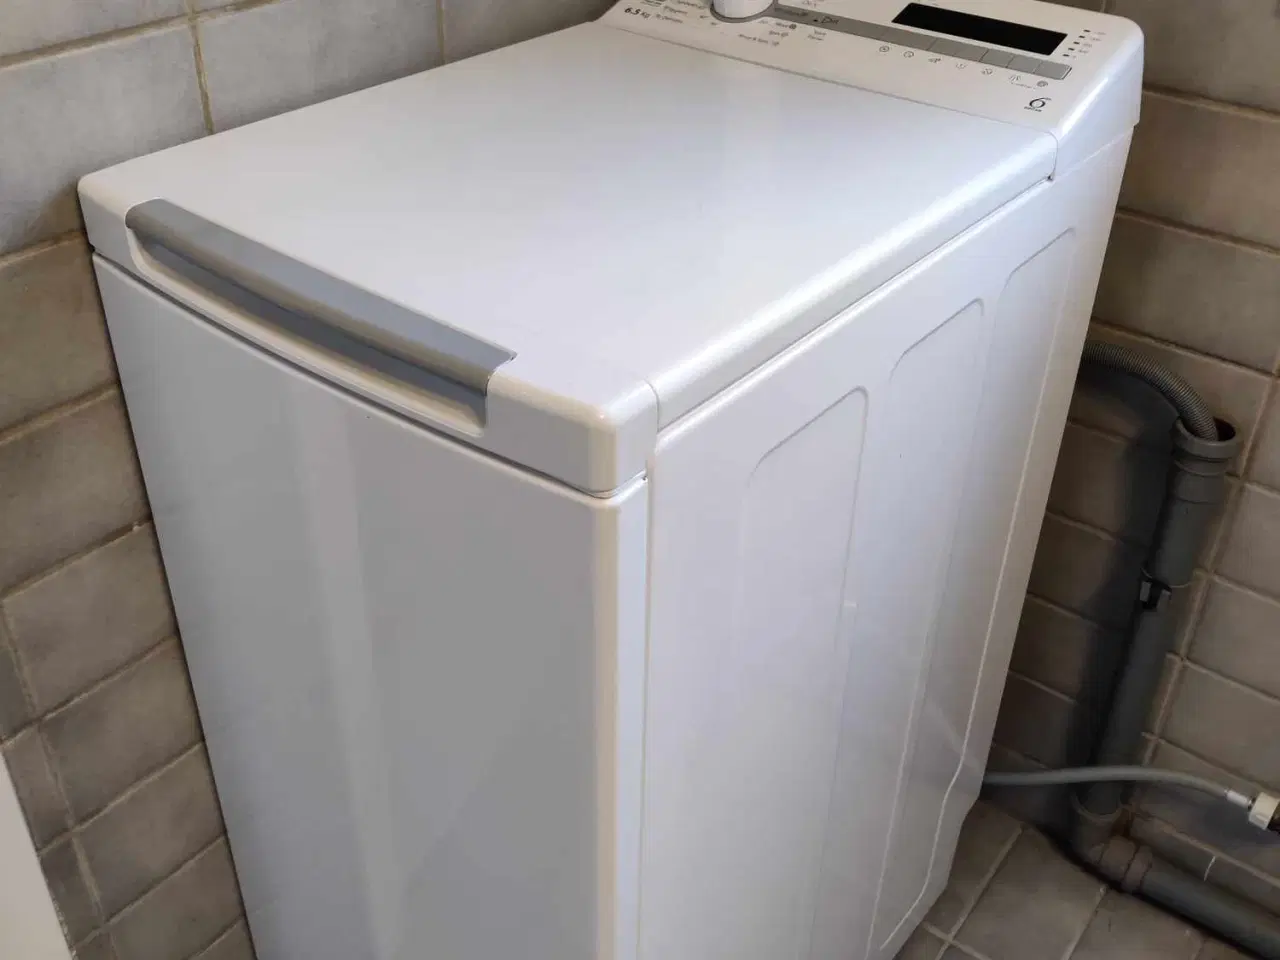 Billede 1 - Whirlpool vaskemaskine, PWTL29126/N, topbetjent